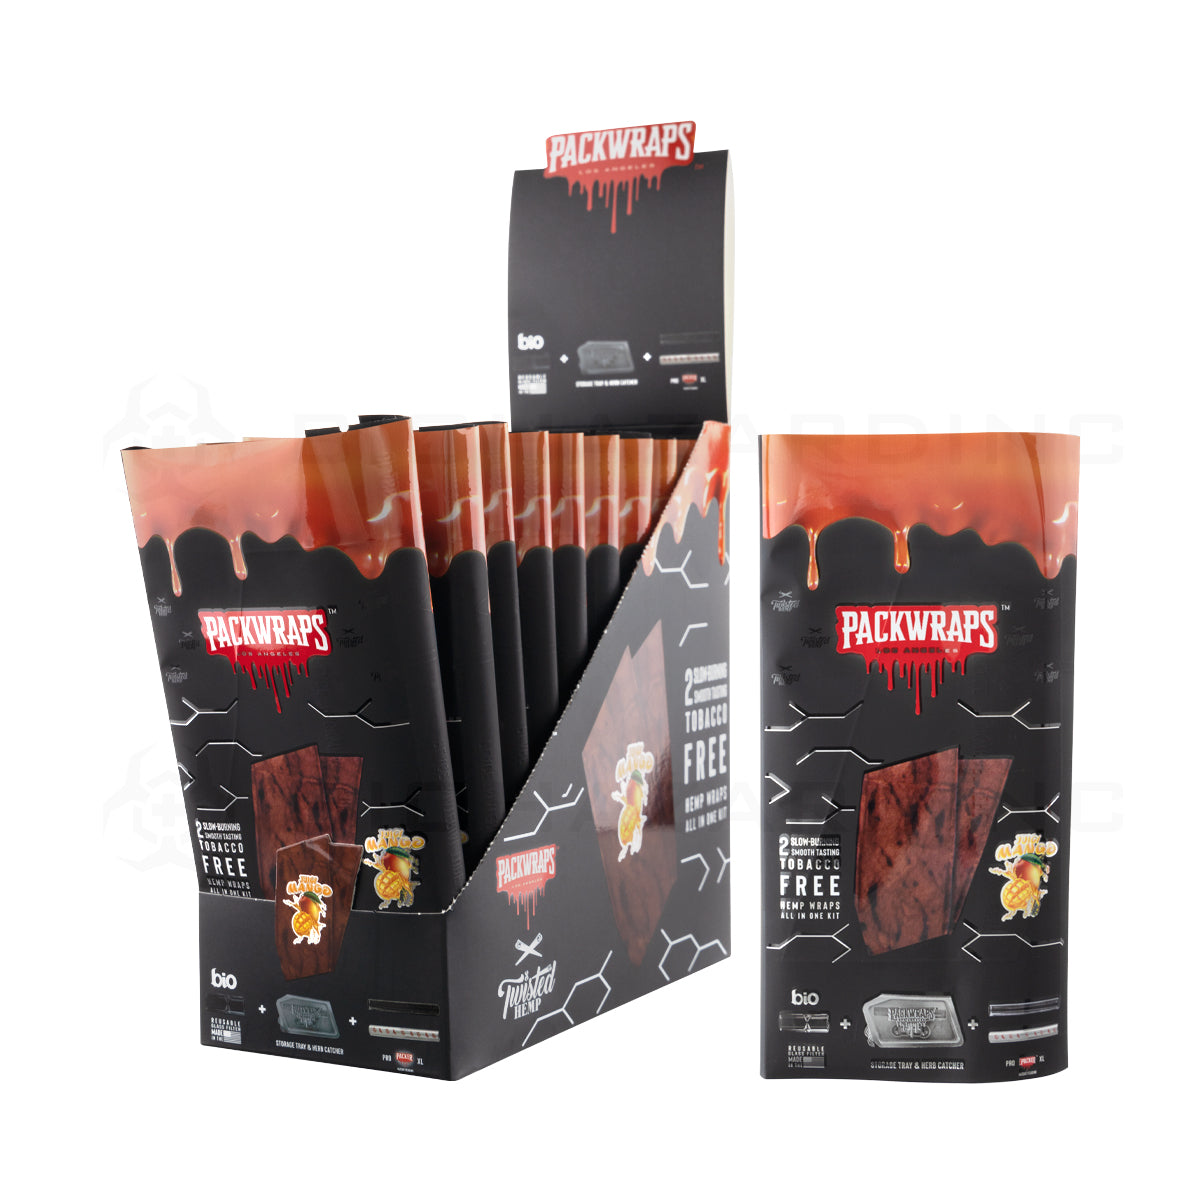 Packwraps™ x BIO™ x Twisted™ | All-in-One Hemp Wrap Kit | 10 Count - Various Flavors Hemp Wraps Packwoods Juicy Mango  